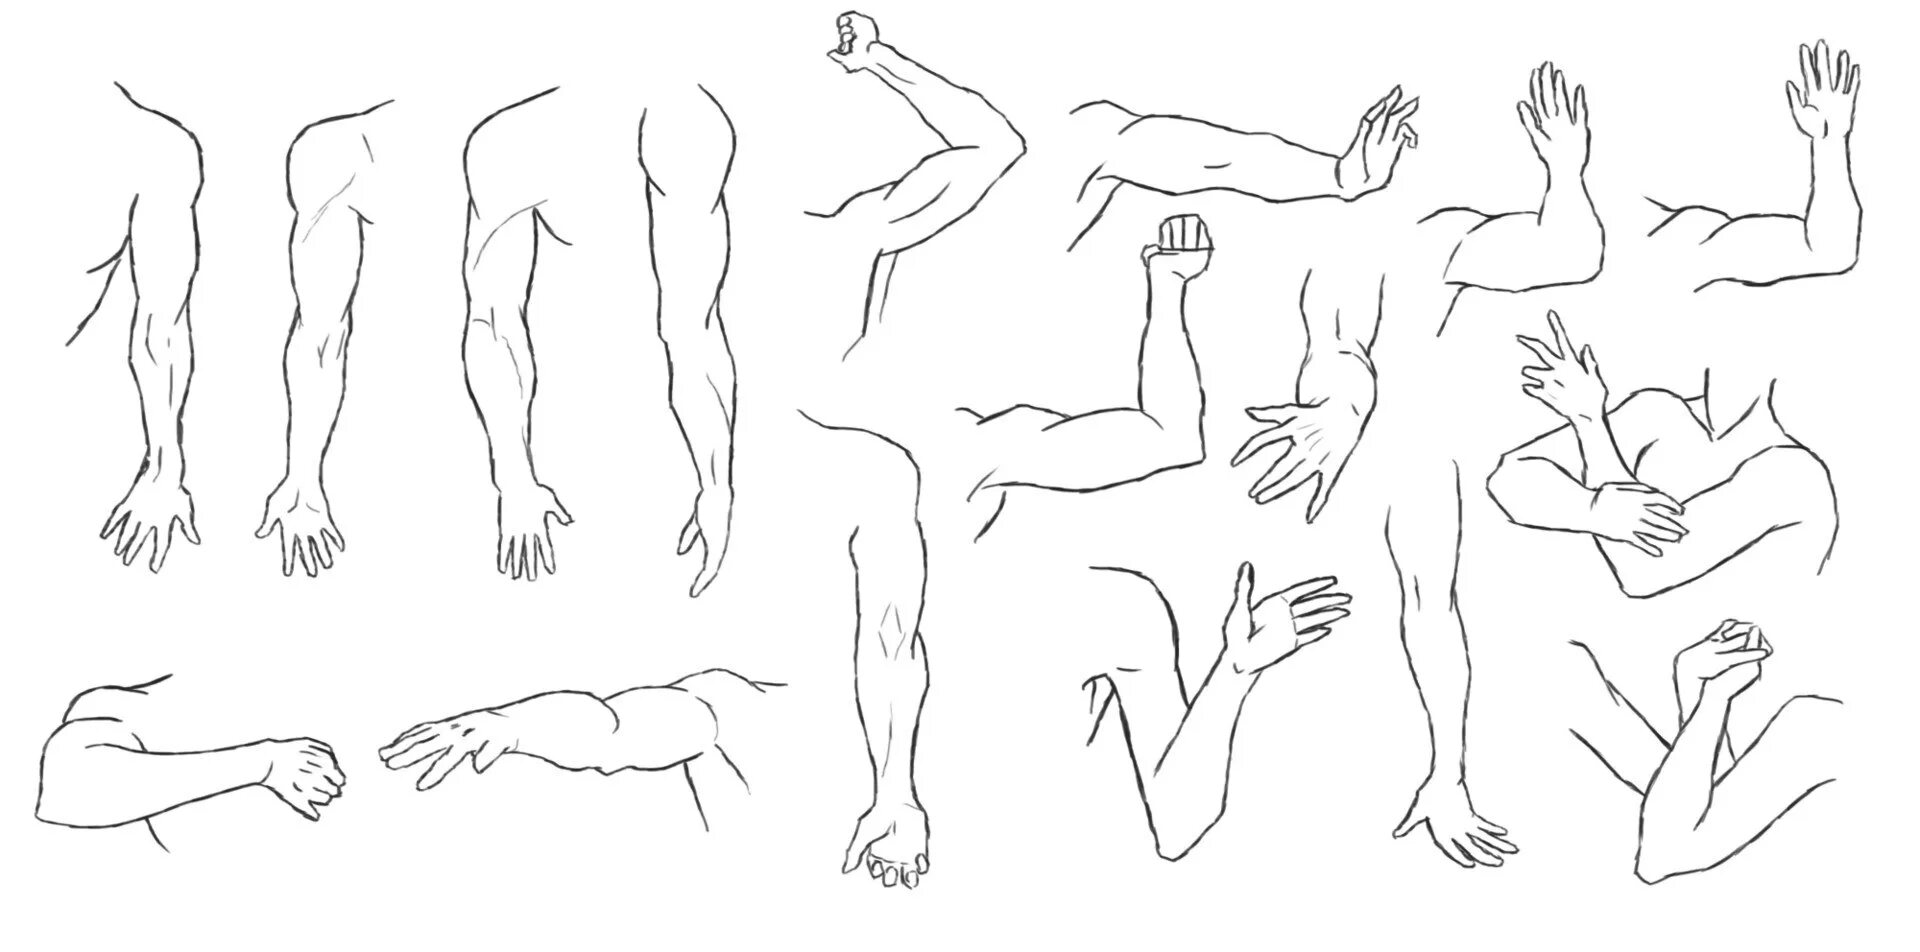 Рука в локте референс. Рука до плеча референс. Согнутая рука. Анатомия рук для рисования.